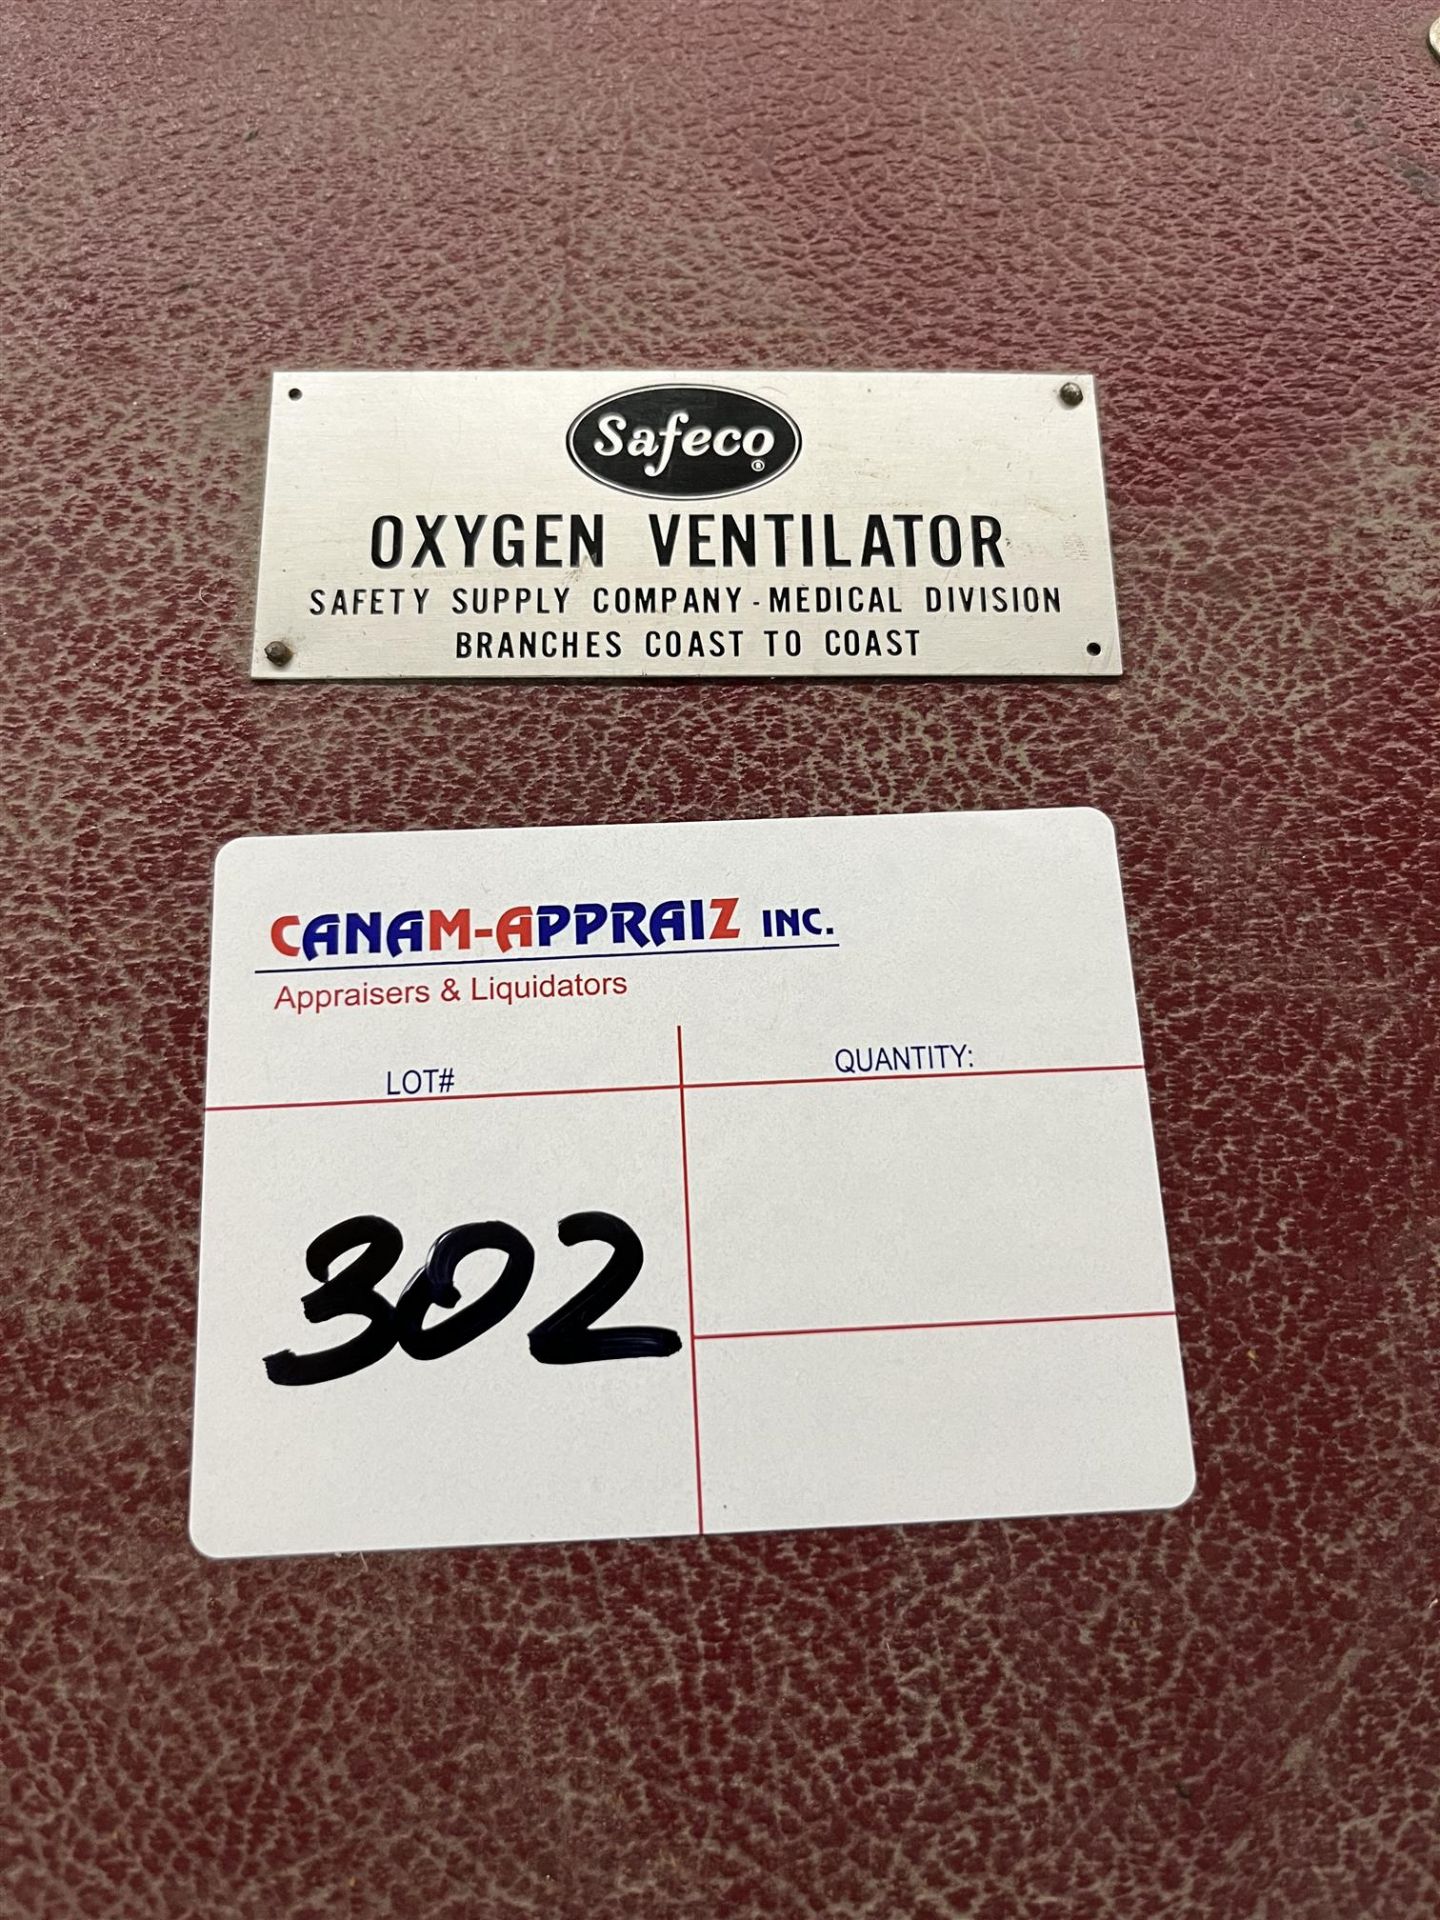 Safeco Oxygen Ventilator - Image 2 of 2